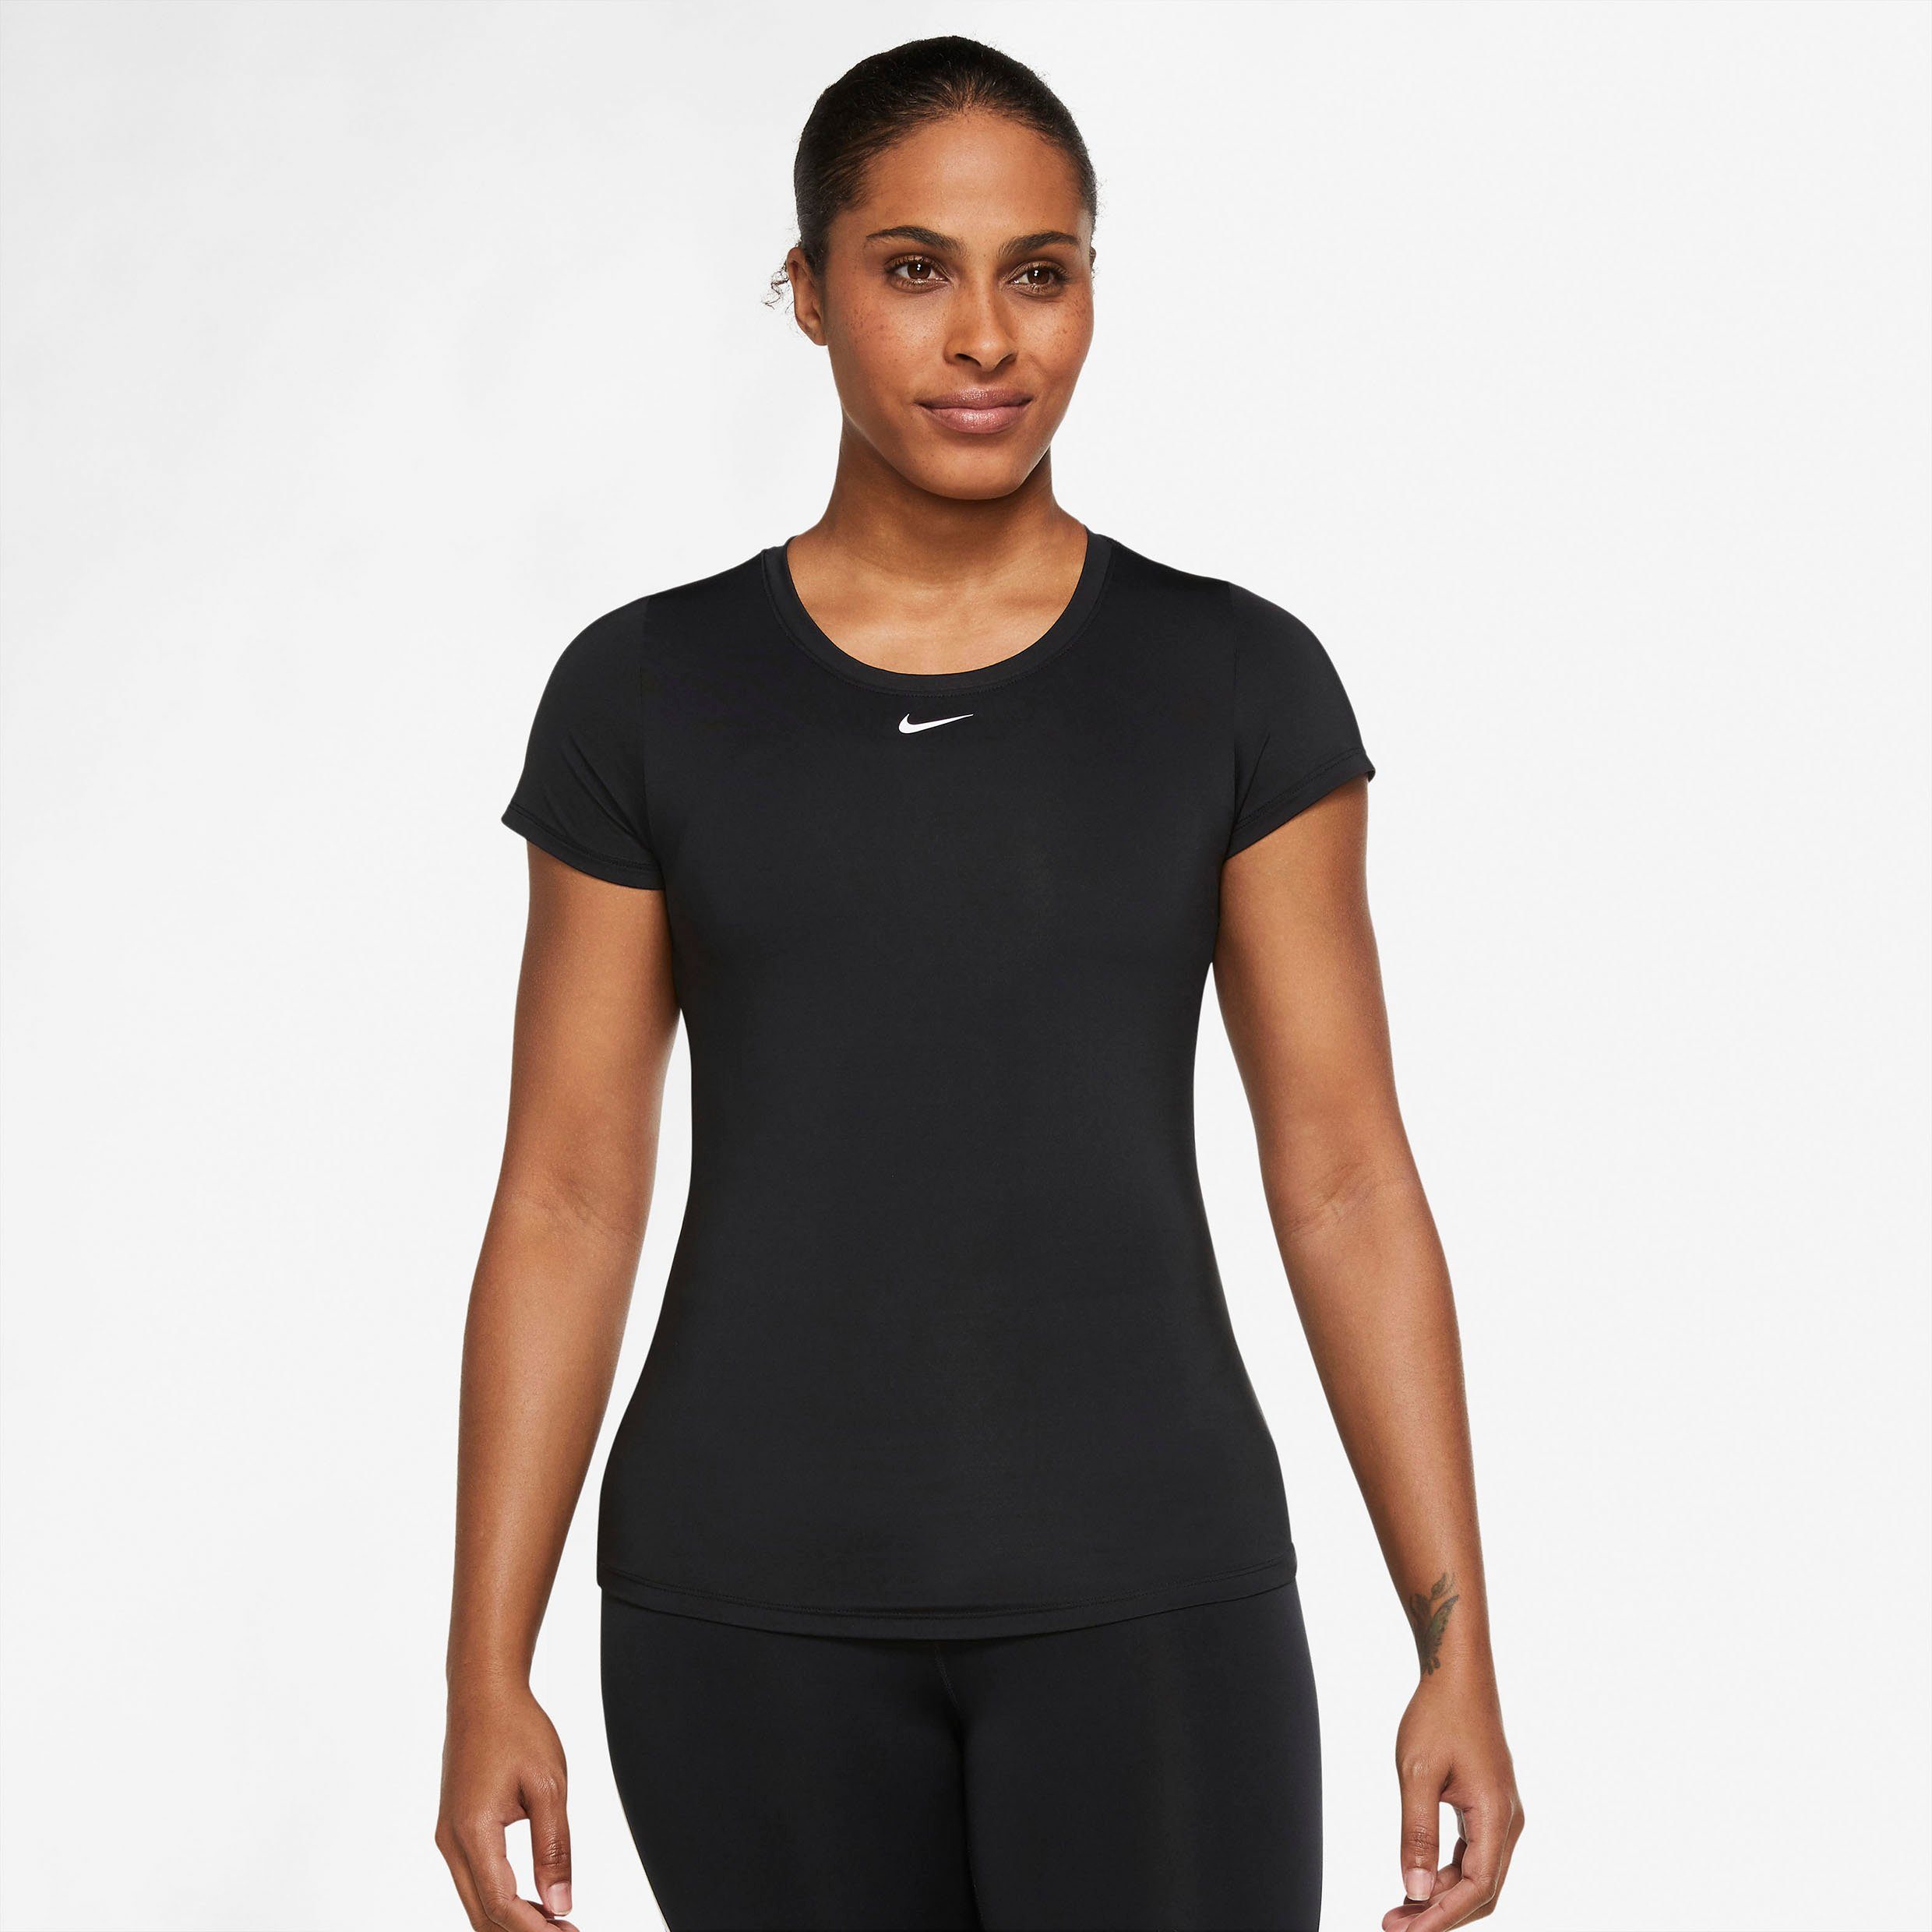 Nike Trainingsshirt DRI-FIT ONE FIT SLIM schwarz WOMEN'S TOP SHORT-SLEEVE